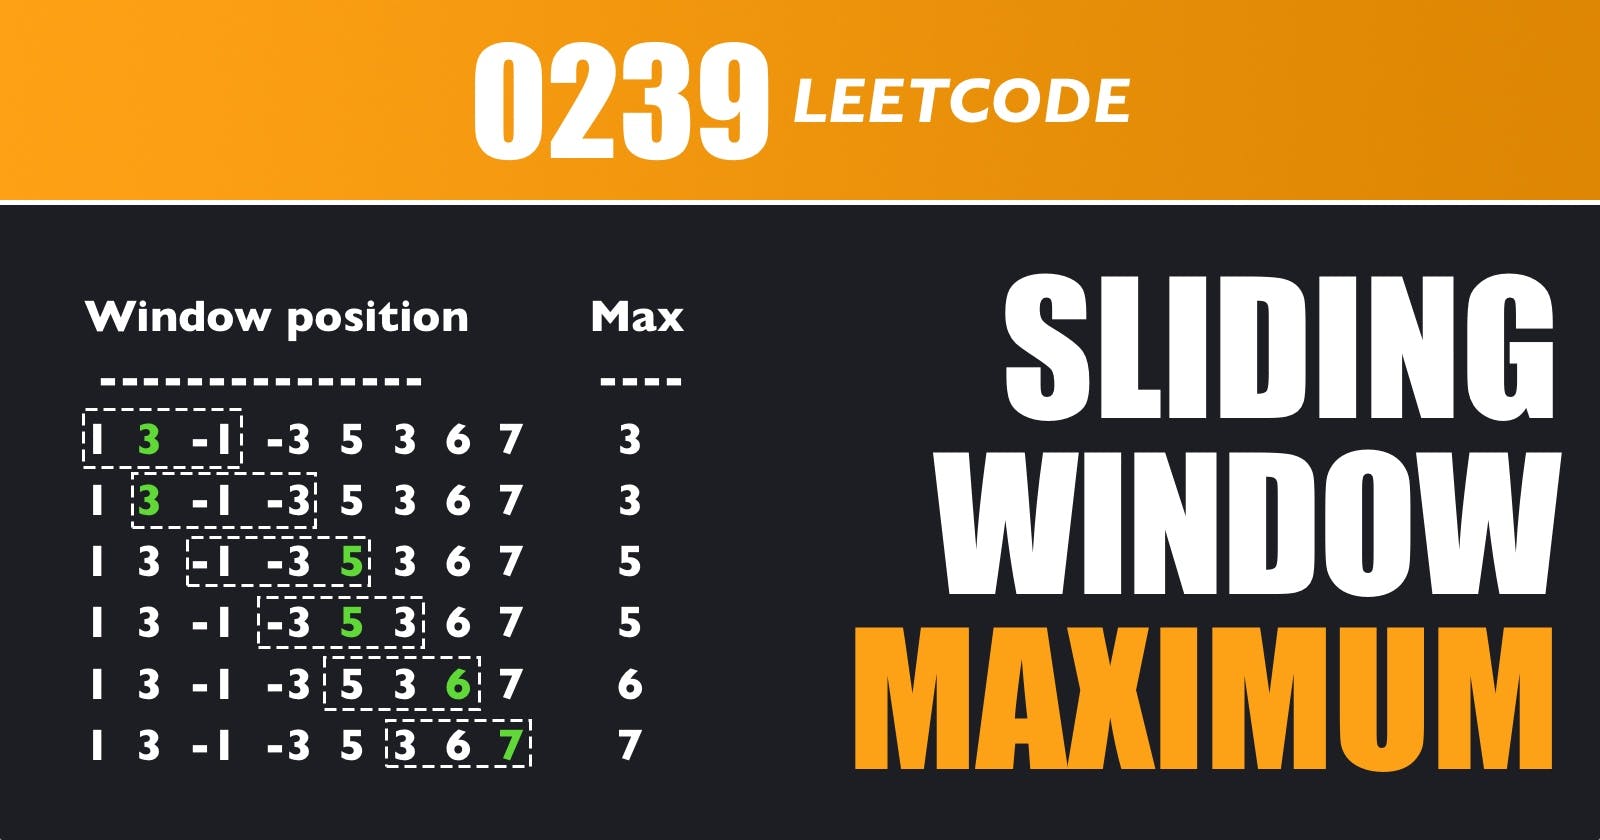 Sliding Window Maximum - Leetcode 239